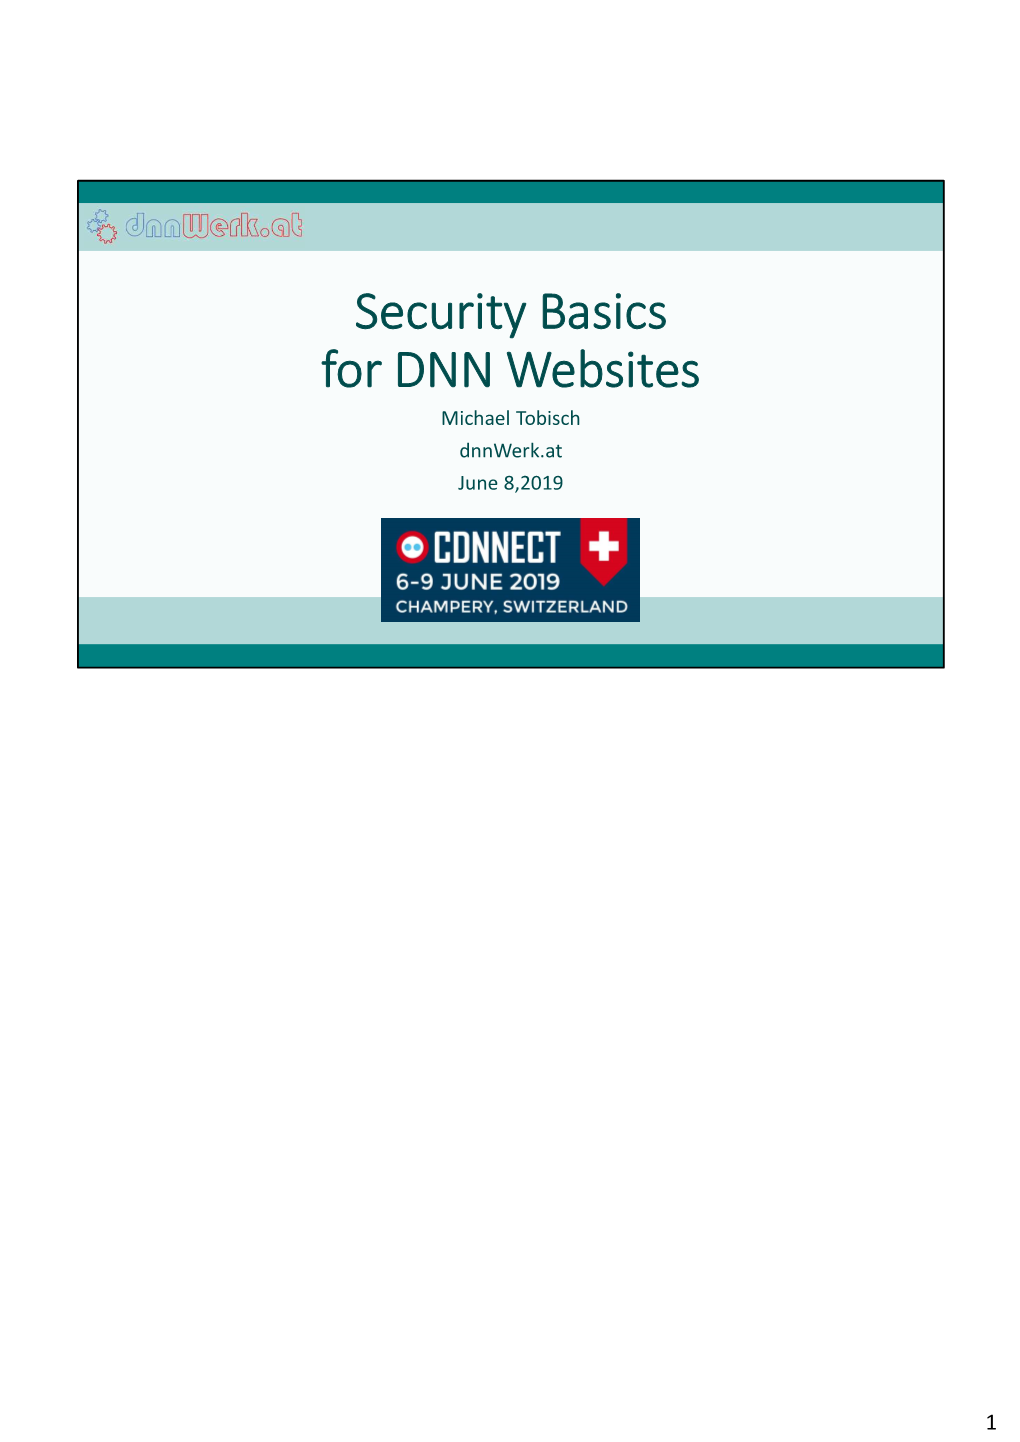 Security Basics for DNN Websites Michael Tobisch Dnnwerk.At June 8,2019